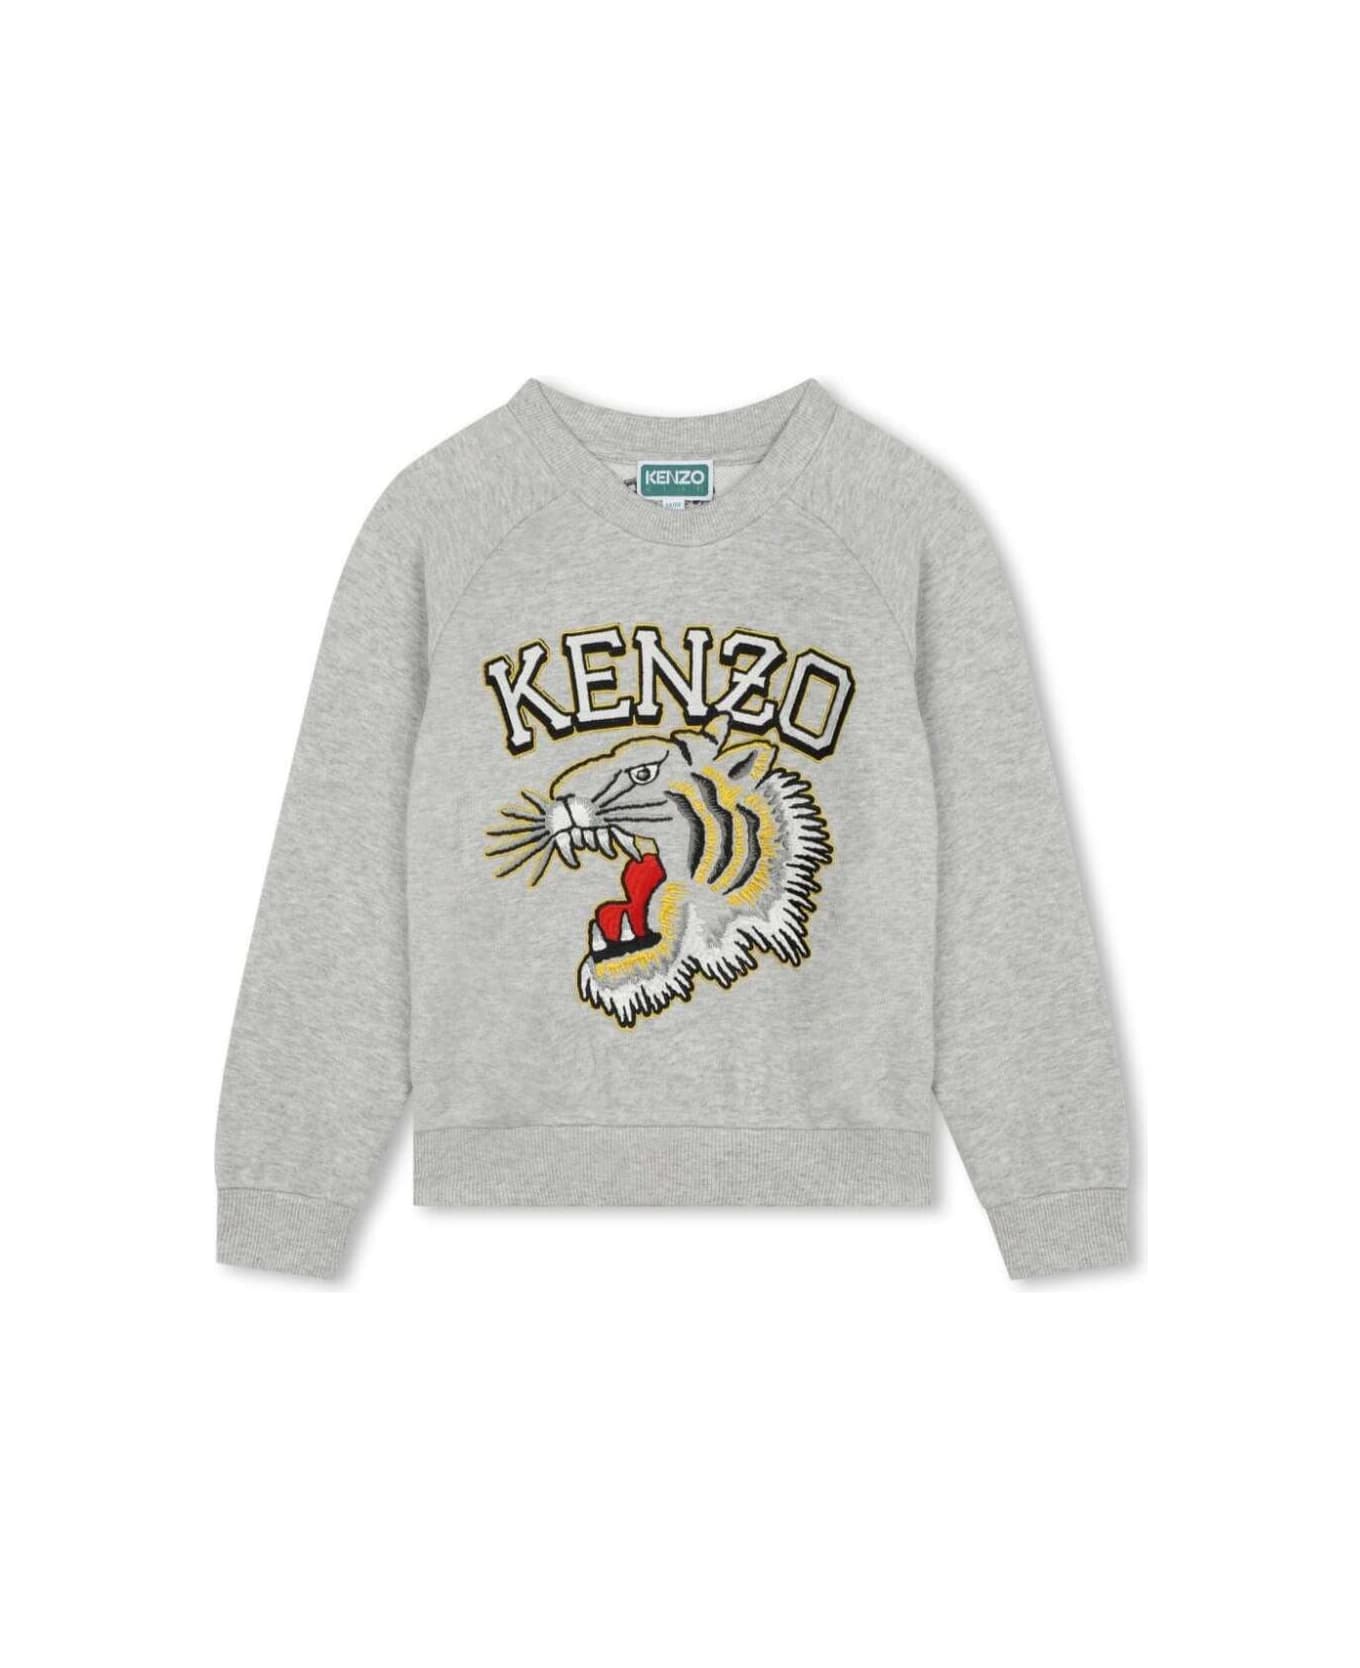 Kenzo Kids K60323a47 - Grigio Antico